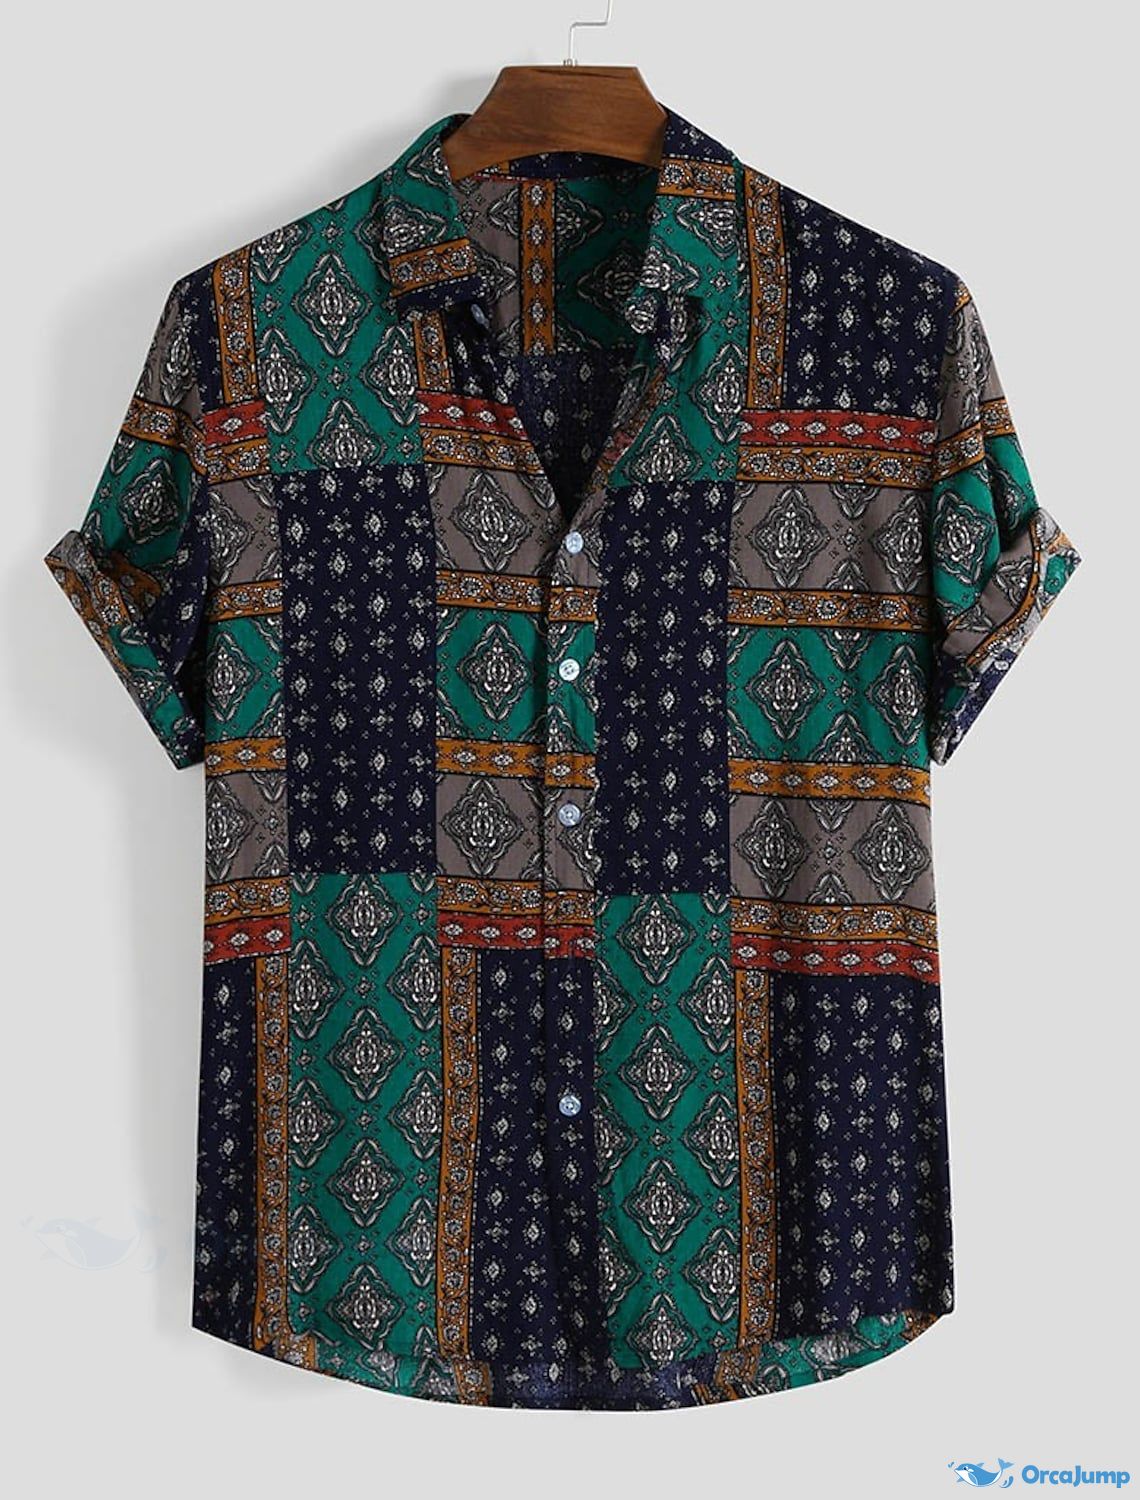 OrcaJump - Mens Printed Short Sleeve Button-Down Shirt - Green, Blue,